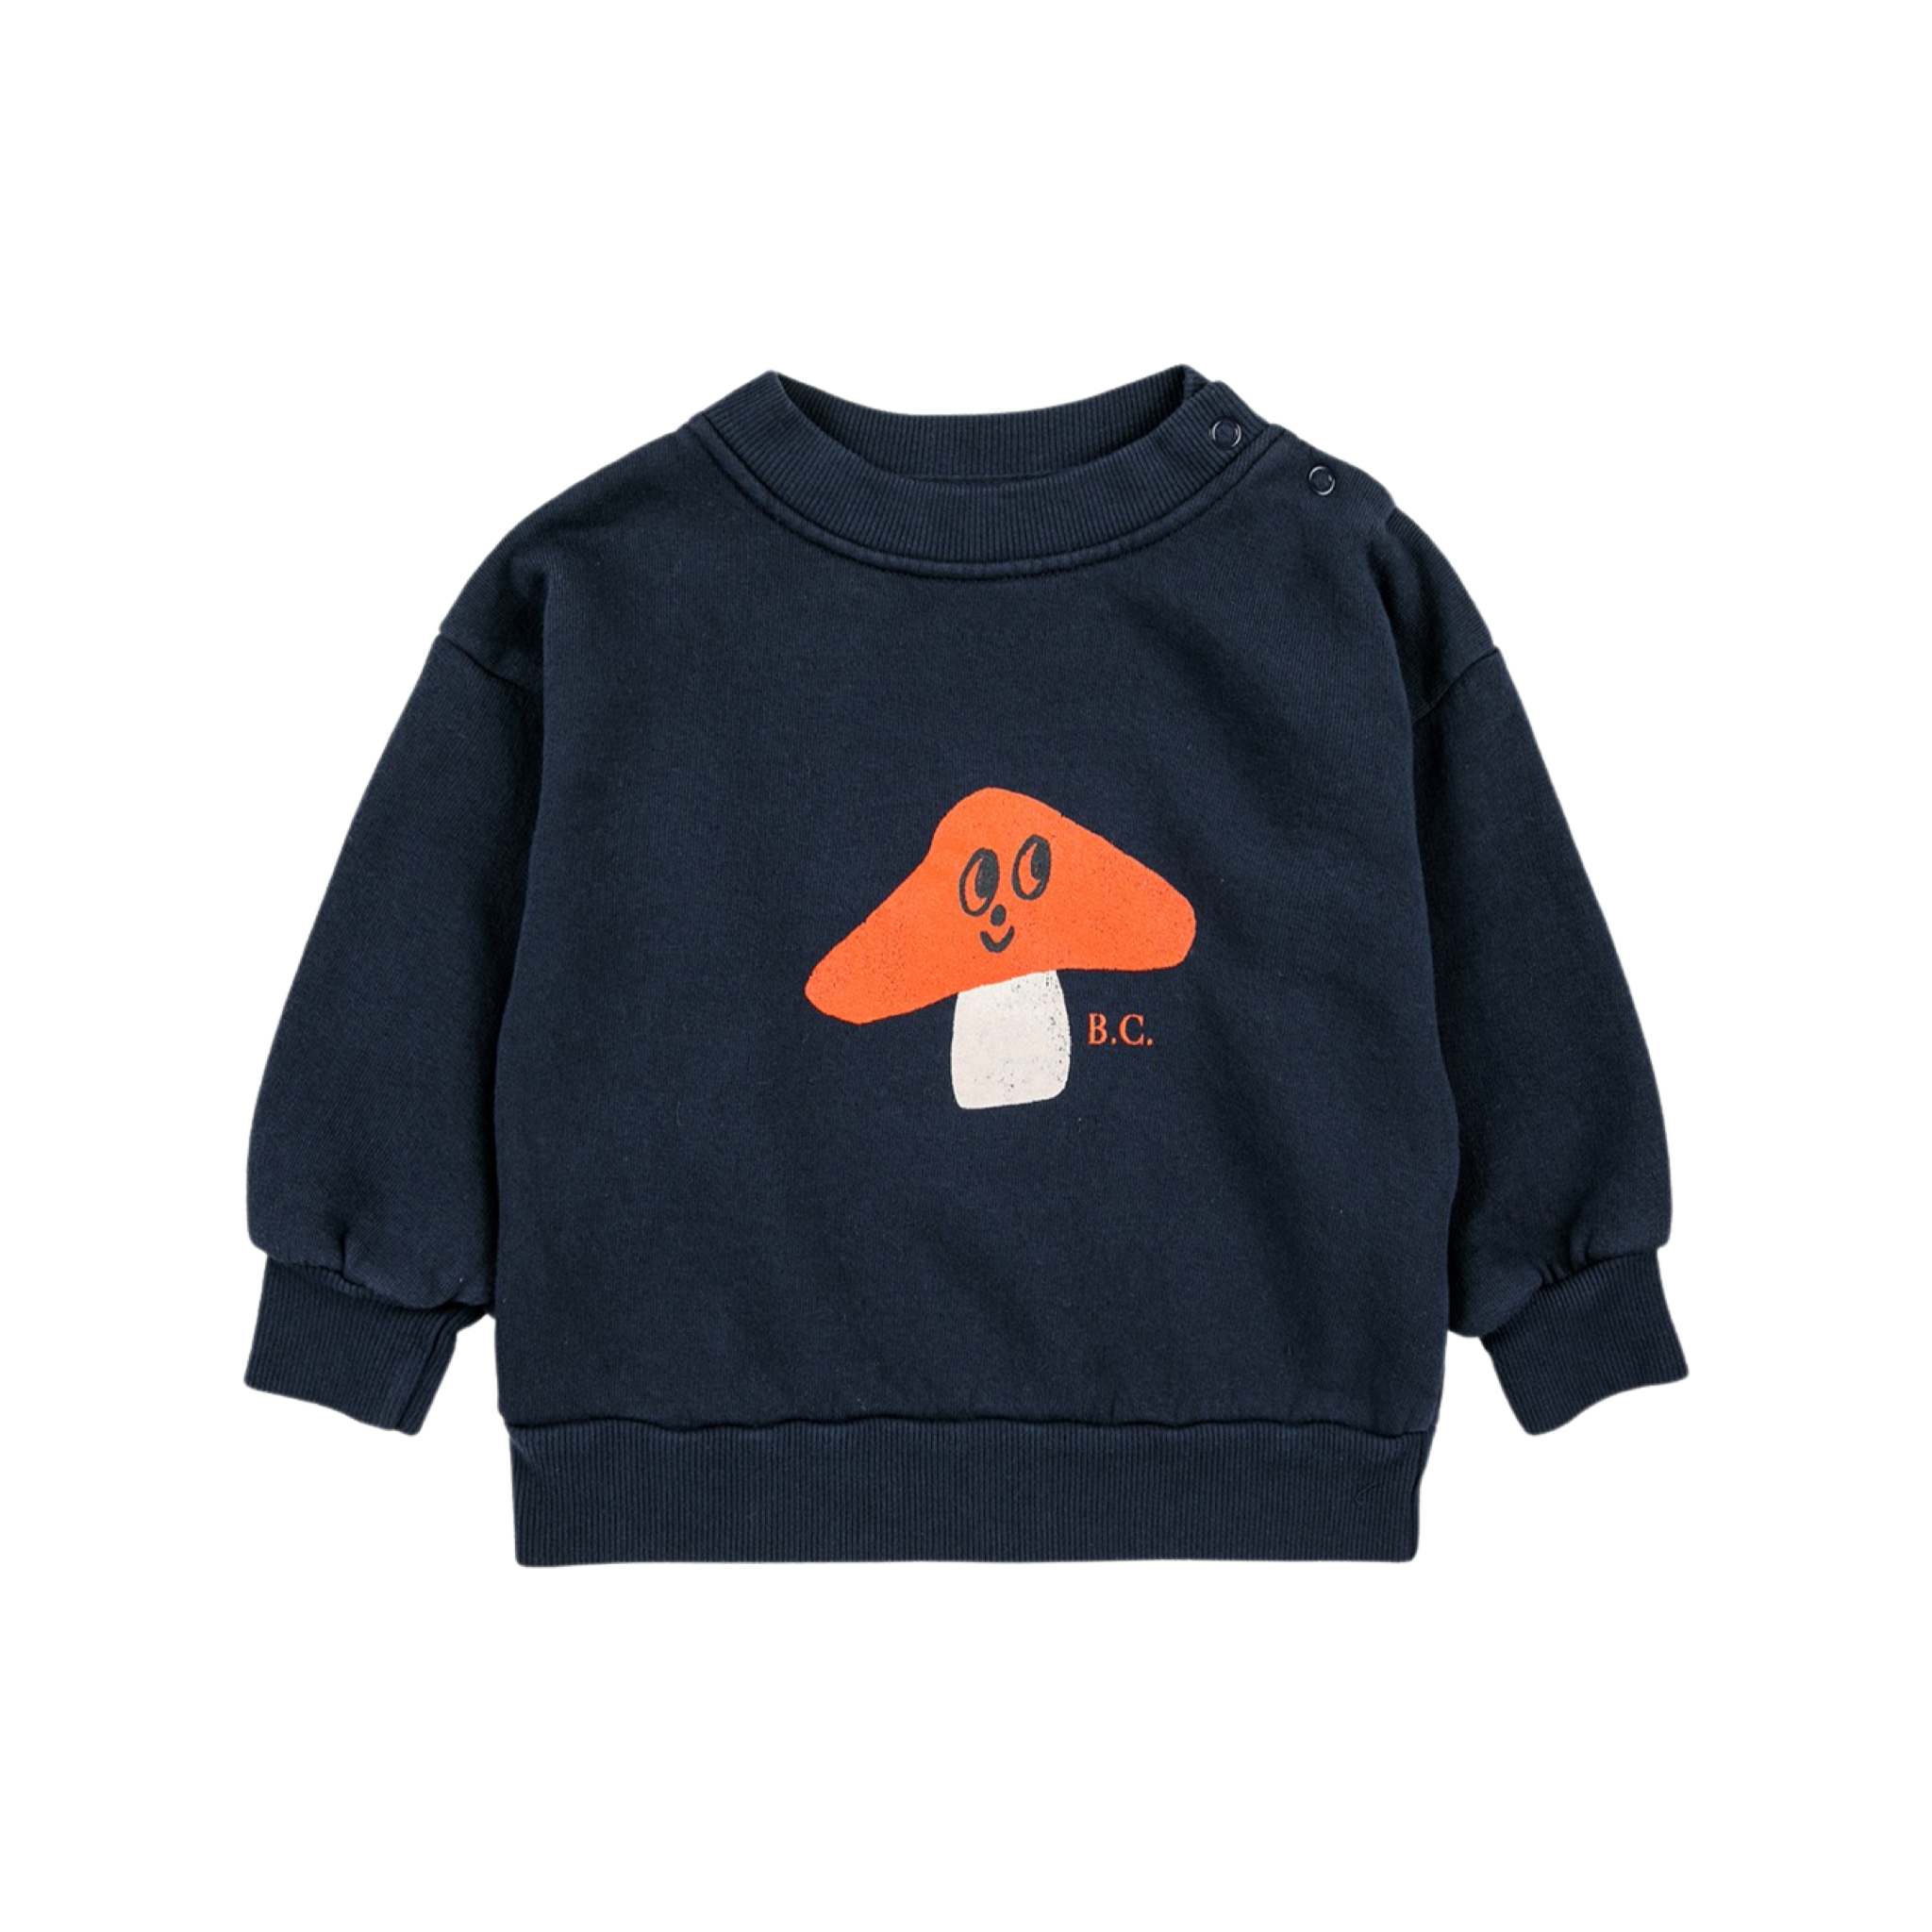 Baby Mr. Mushroom sweatshirt